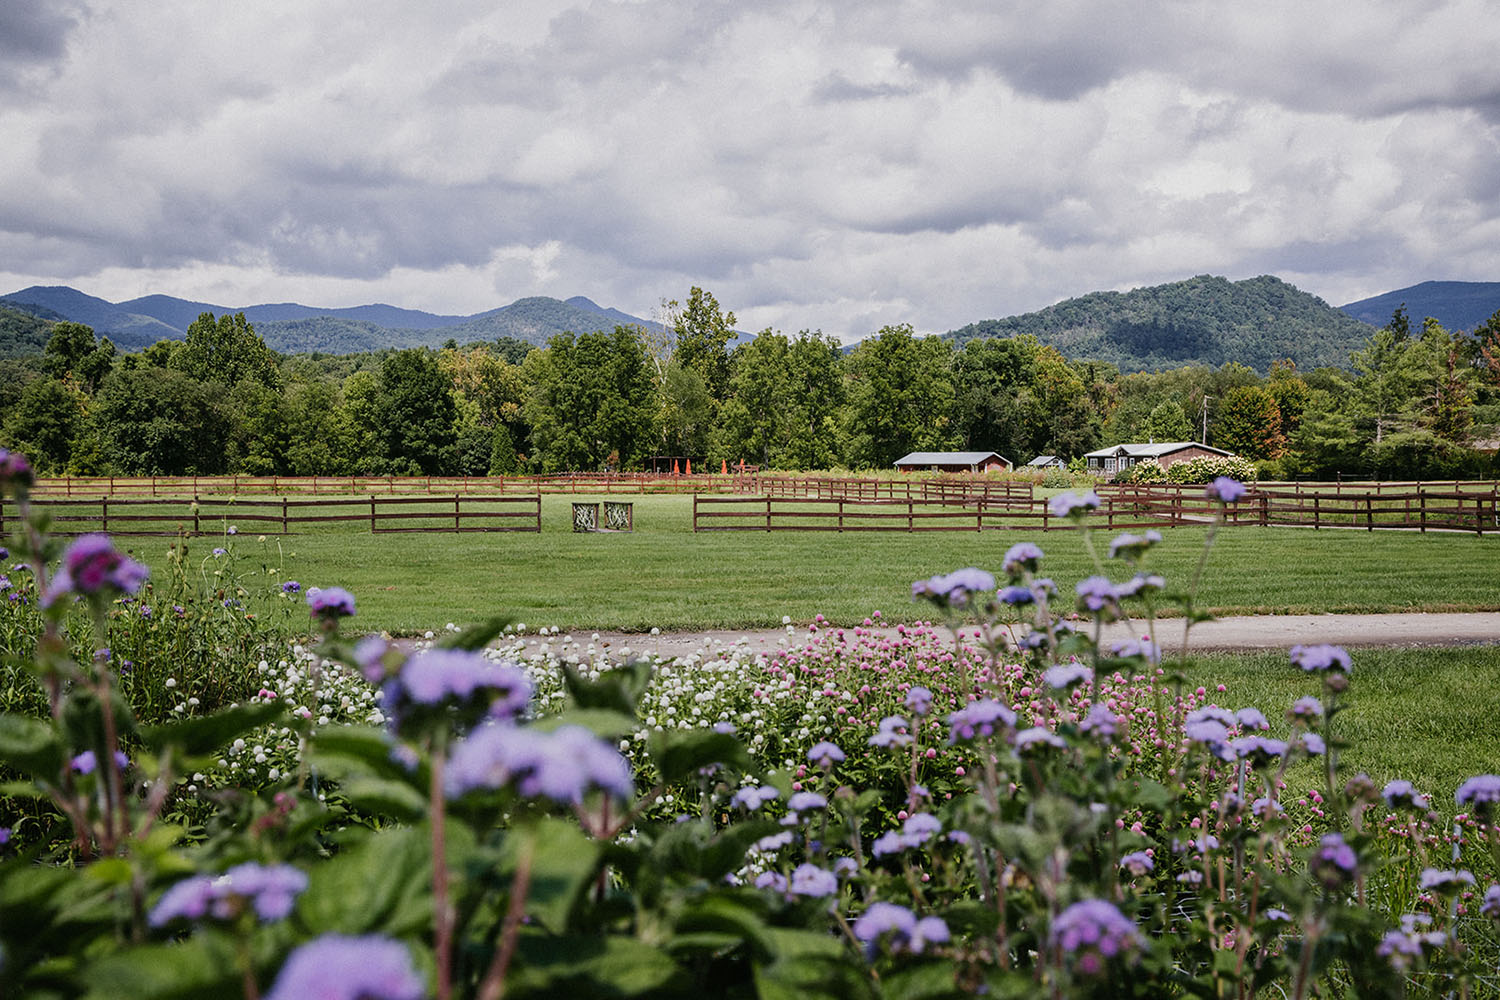 Flower farm and mountain views